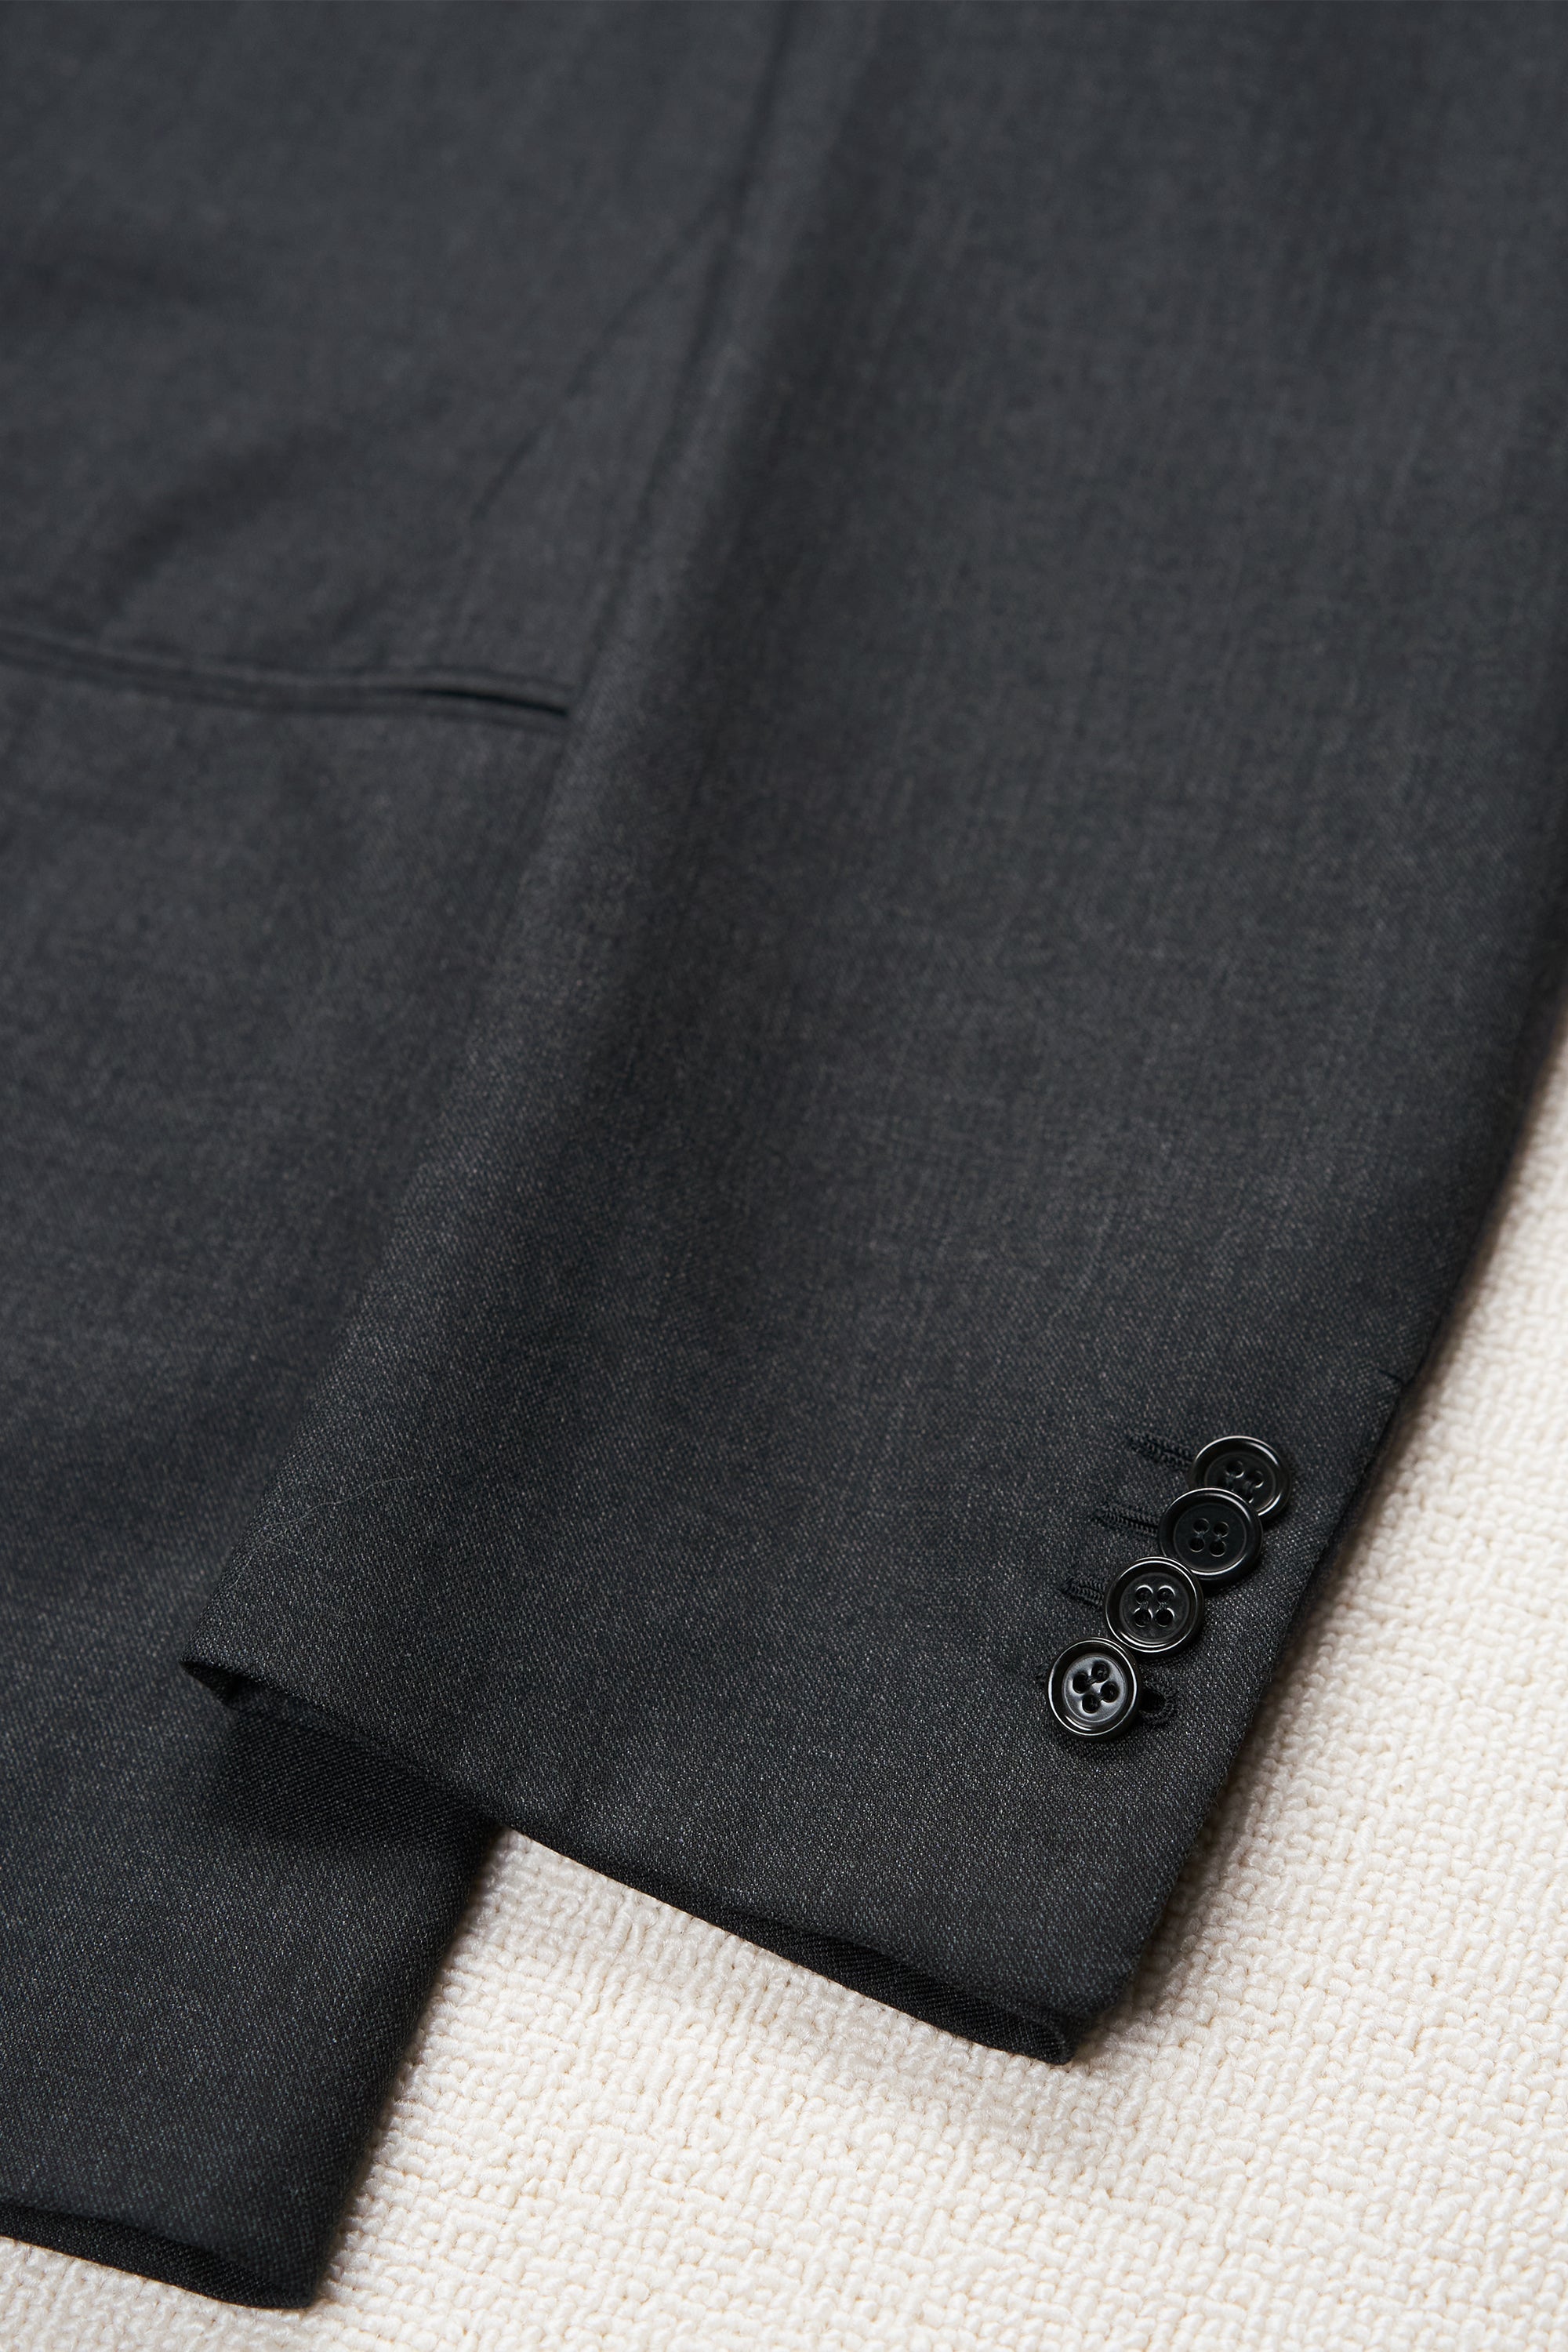 Liverano & Liverano Charcoal Wool Suit Bespoke